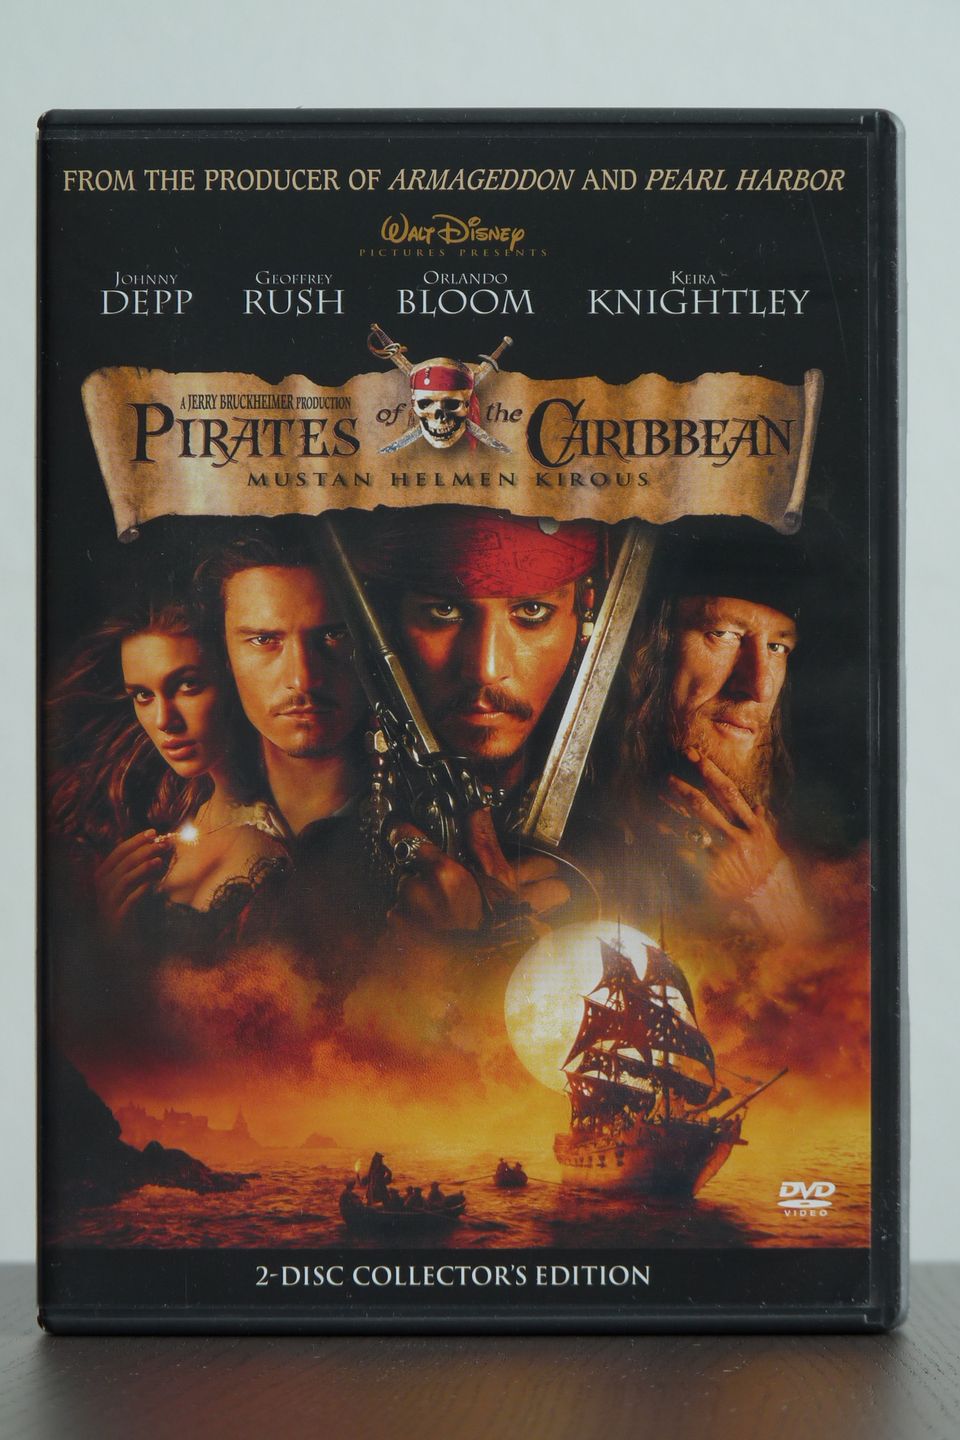 "Pirates of the Caribbean: Mustan helmen kirous"